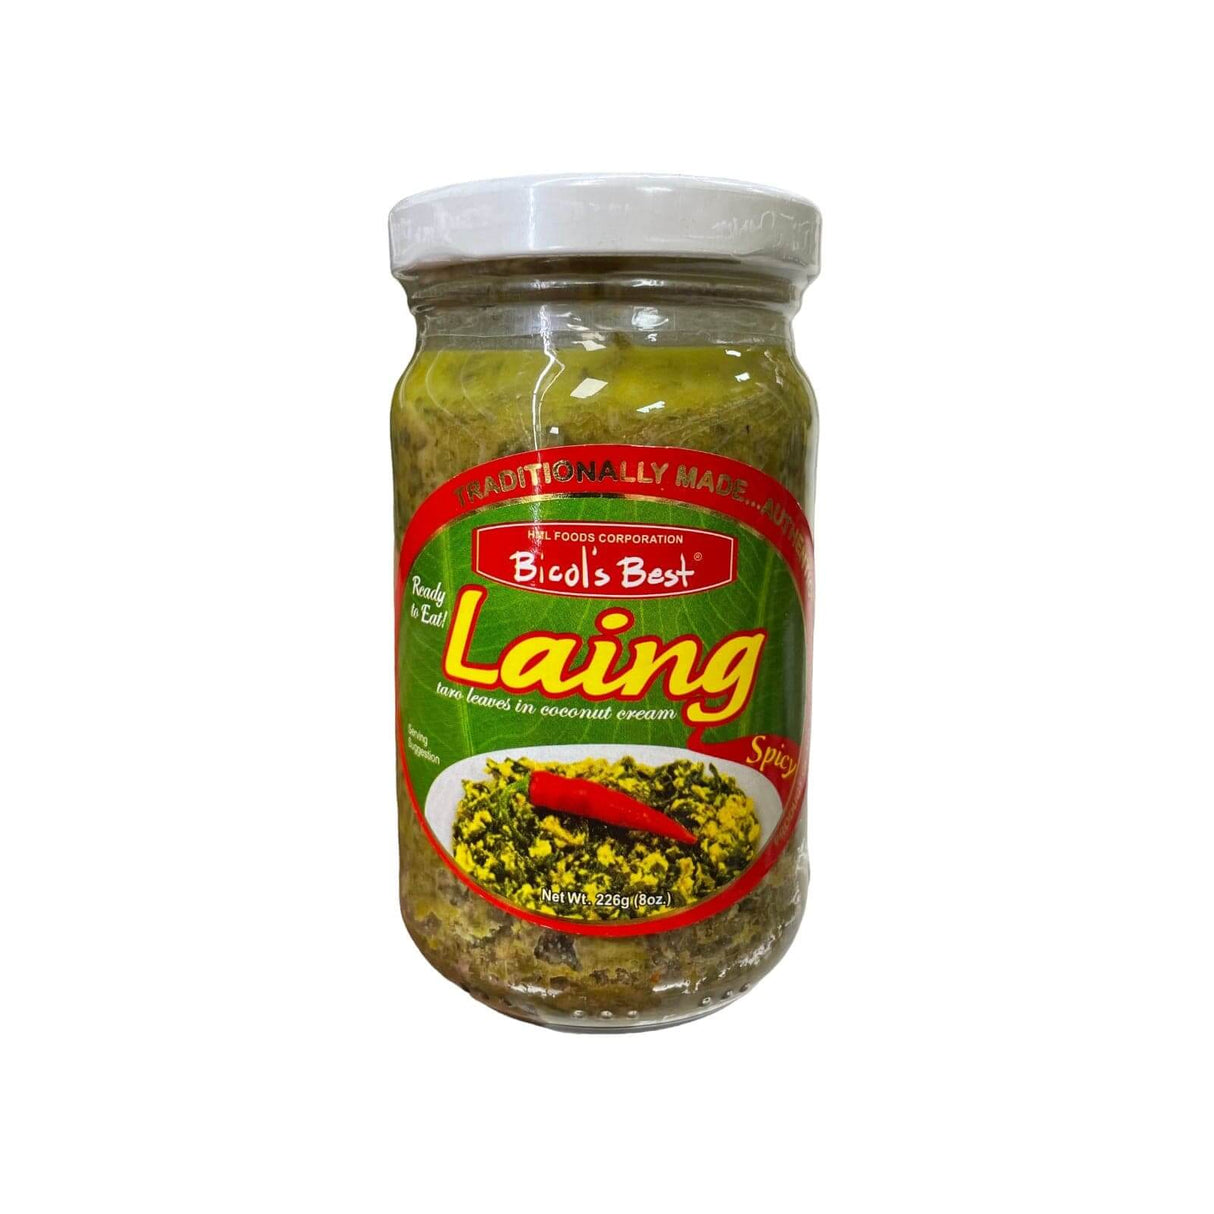 Bicol's Best Laing Spicy